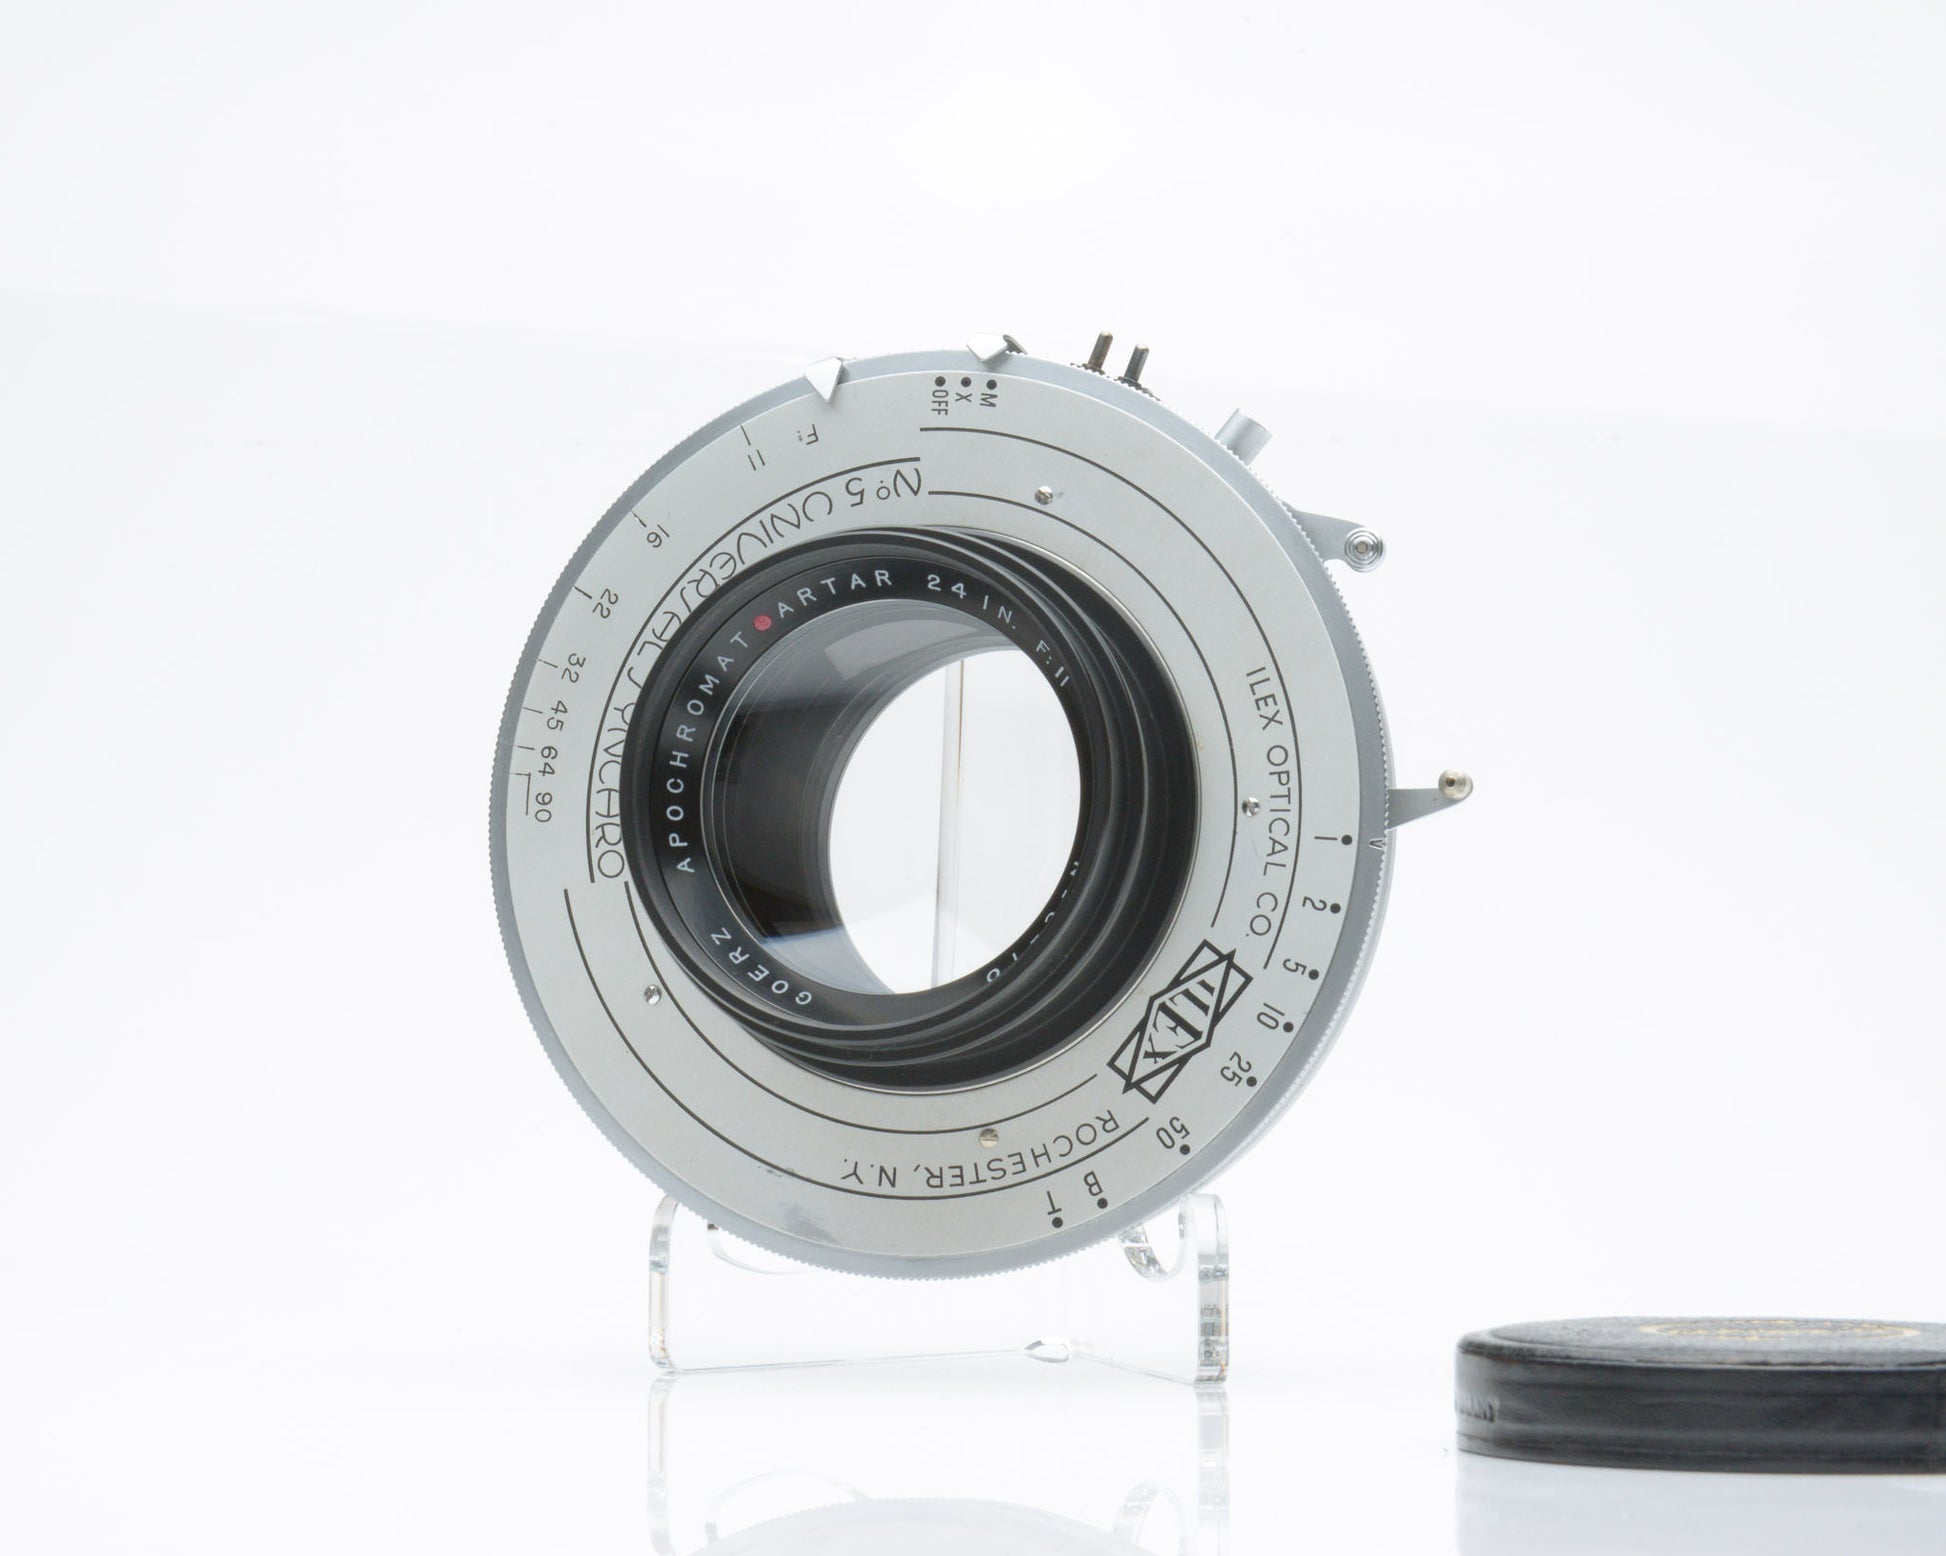 Goerz Apochromat Red Dot Artar 24 In F 11 Ilex Shutter Large Format Camera Lens